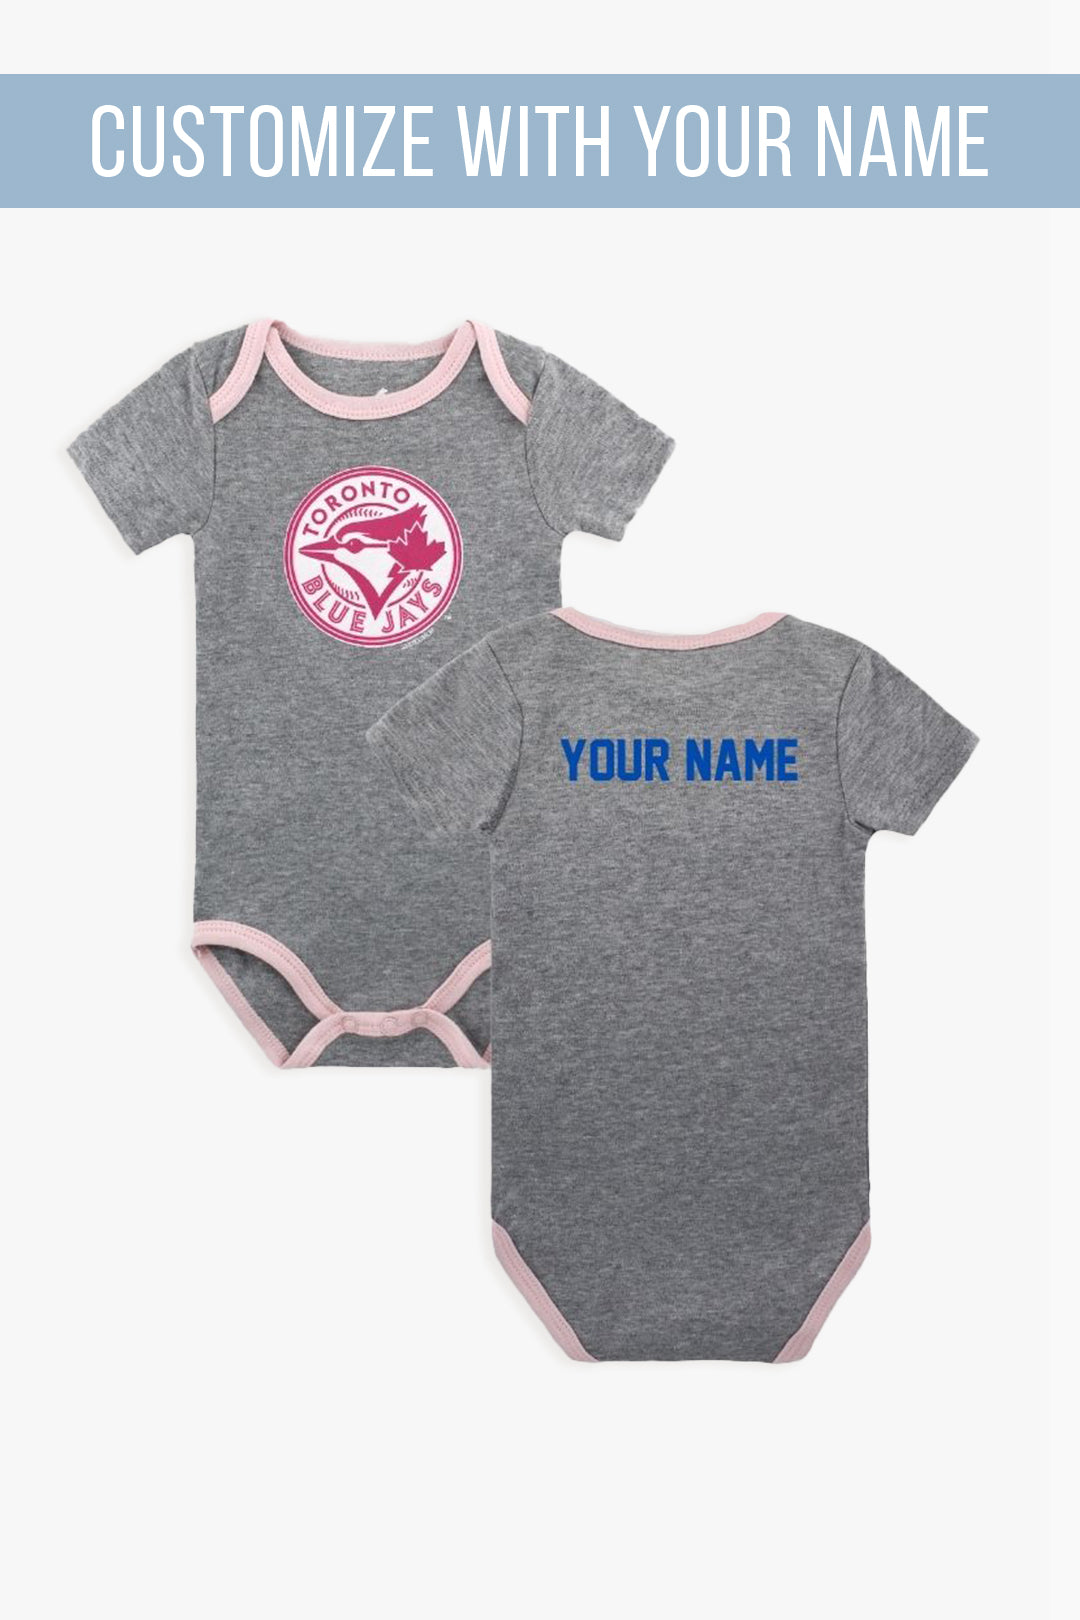 Blue Jays baby/newborn girl Blue Jays baby gift girl Toronto